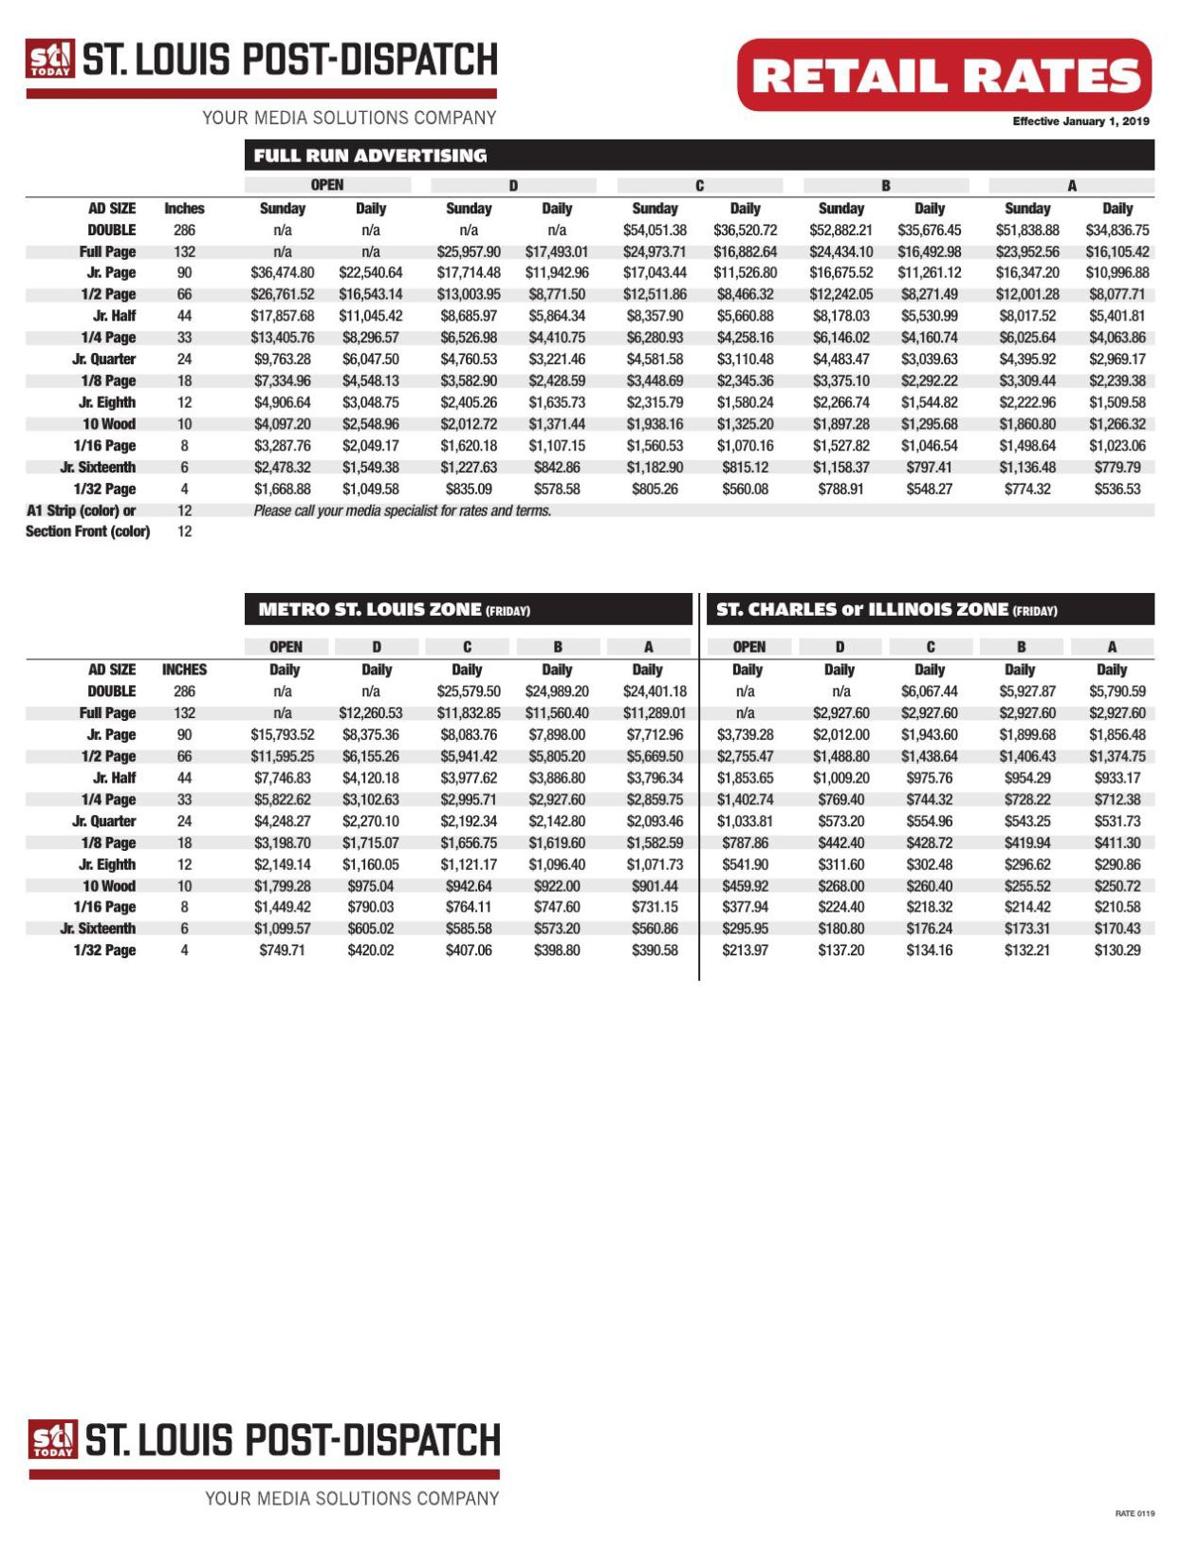 St. Louis Post-Dispatch Retail Rates | Print Media | nrd.kbic-nsn.gov